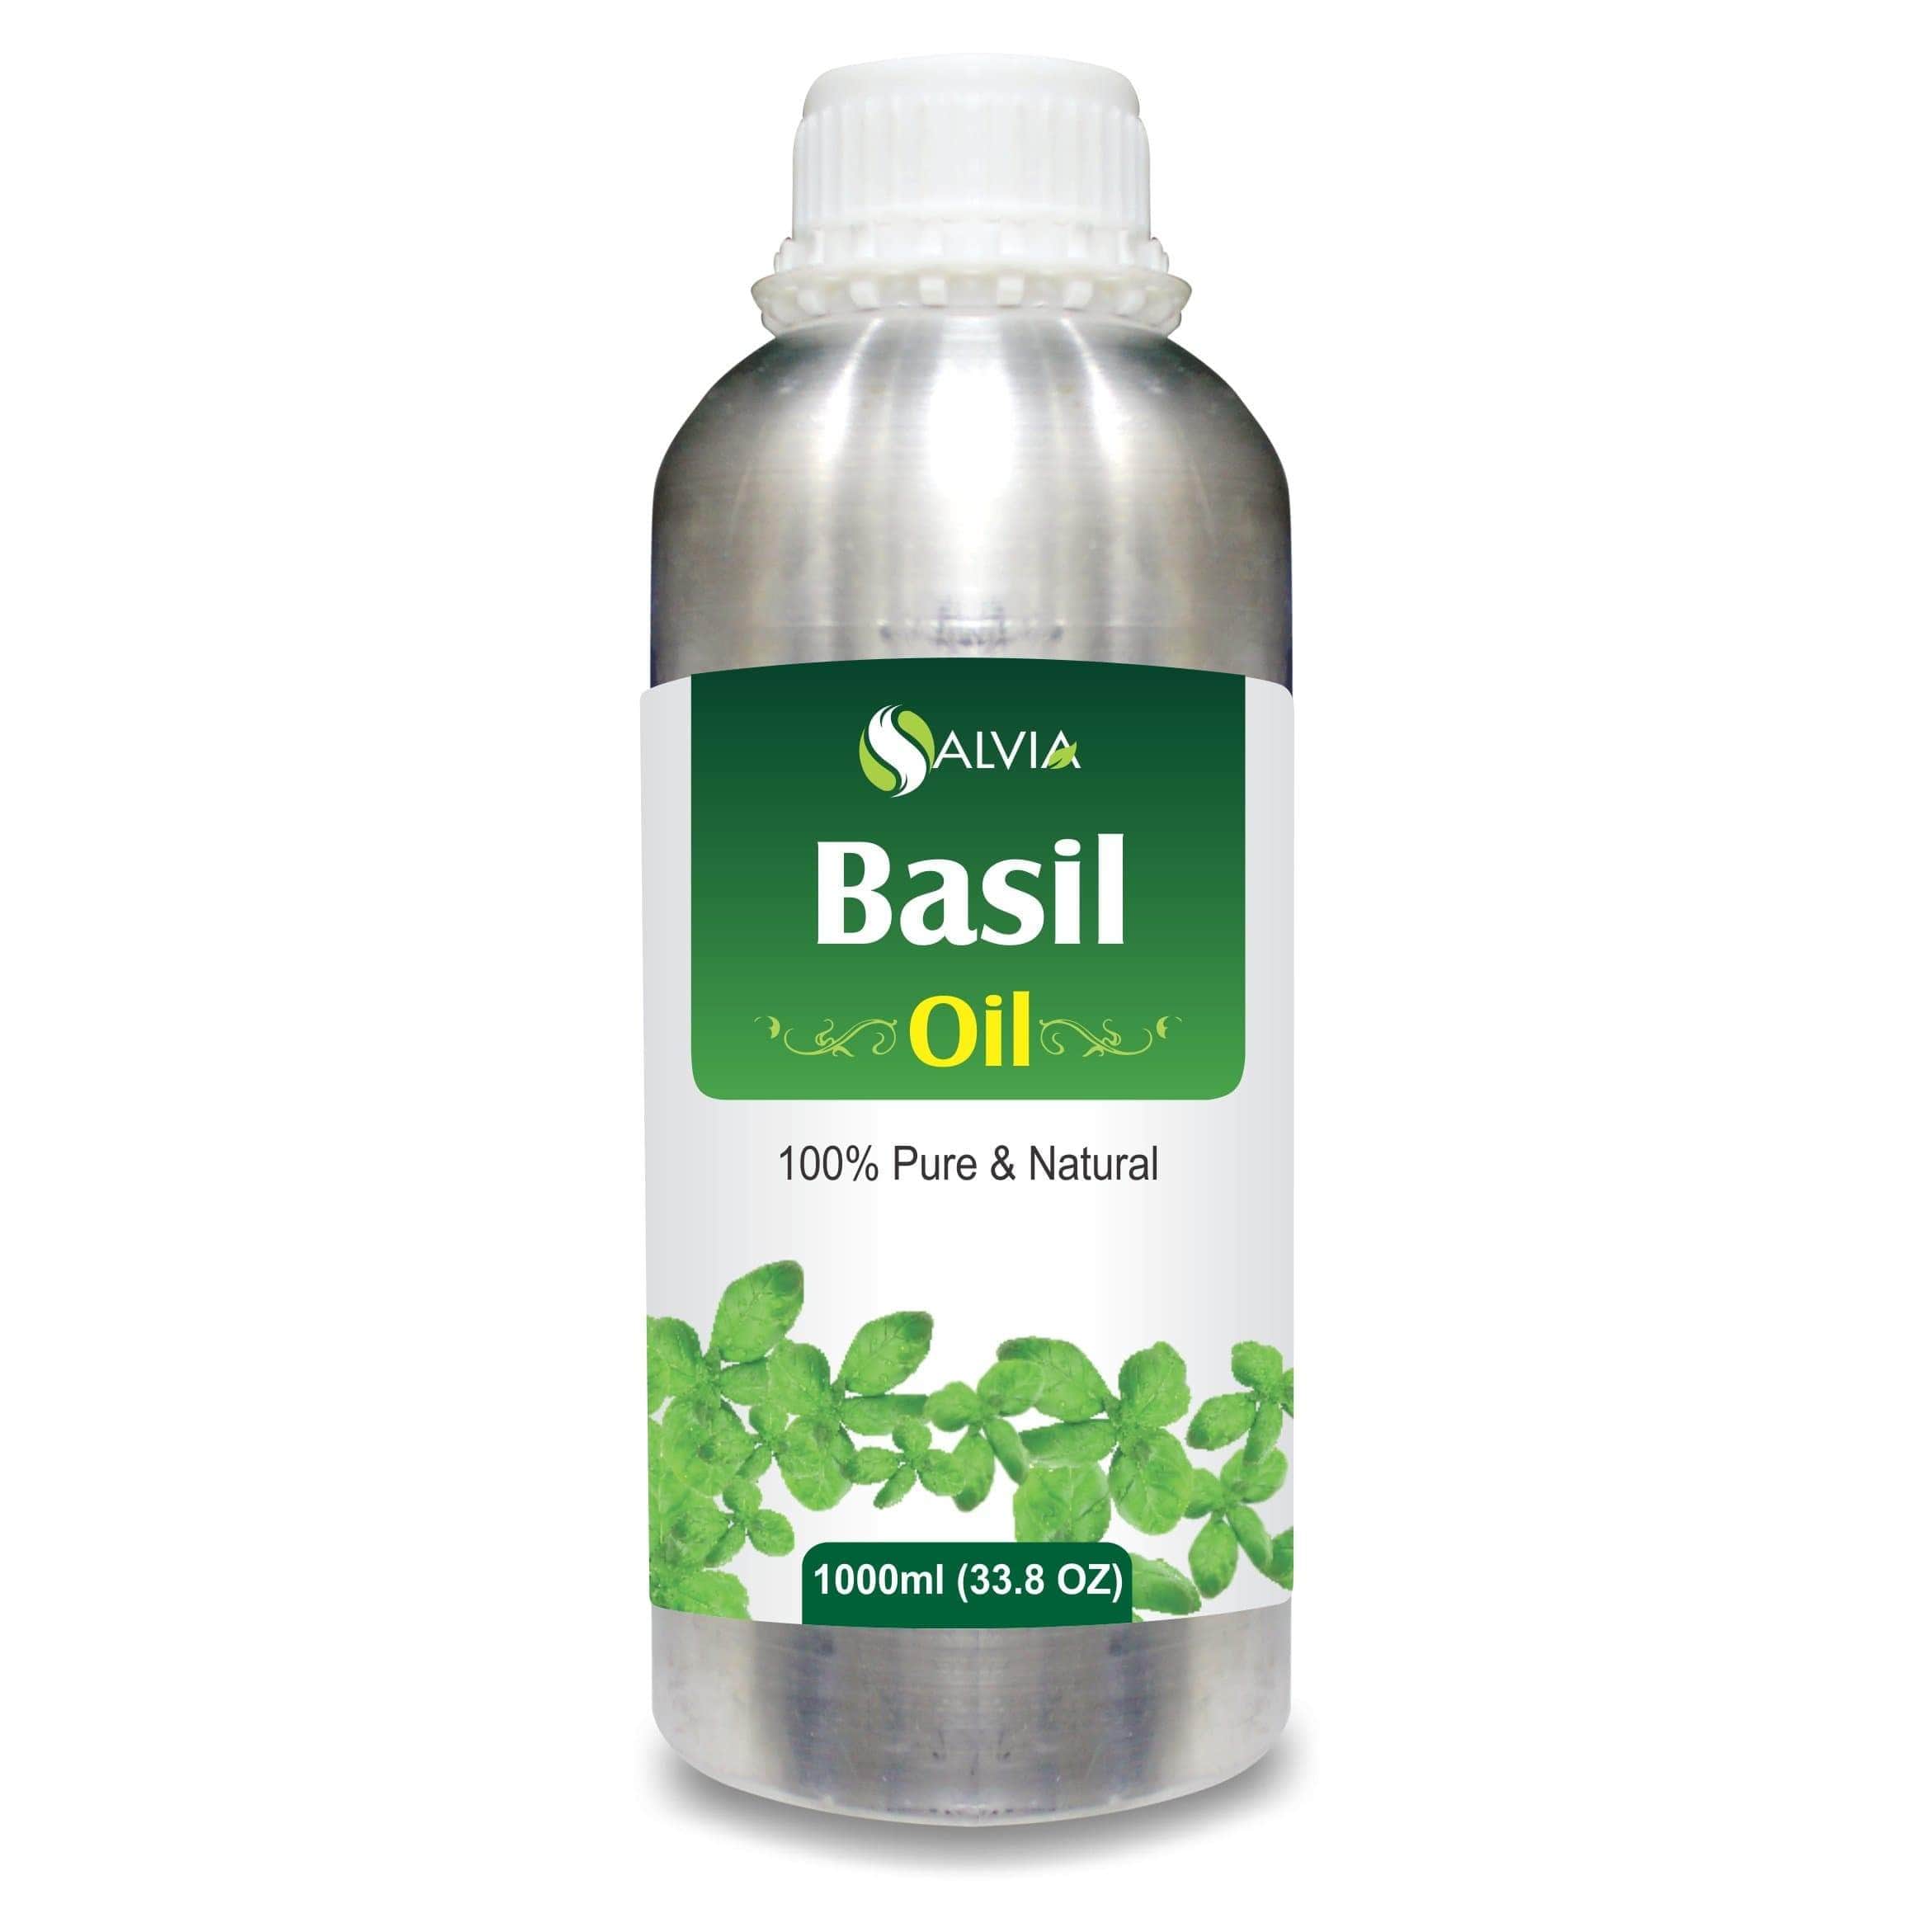  basil essential oil contraindications